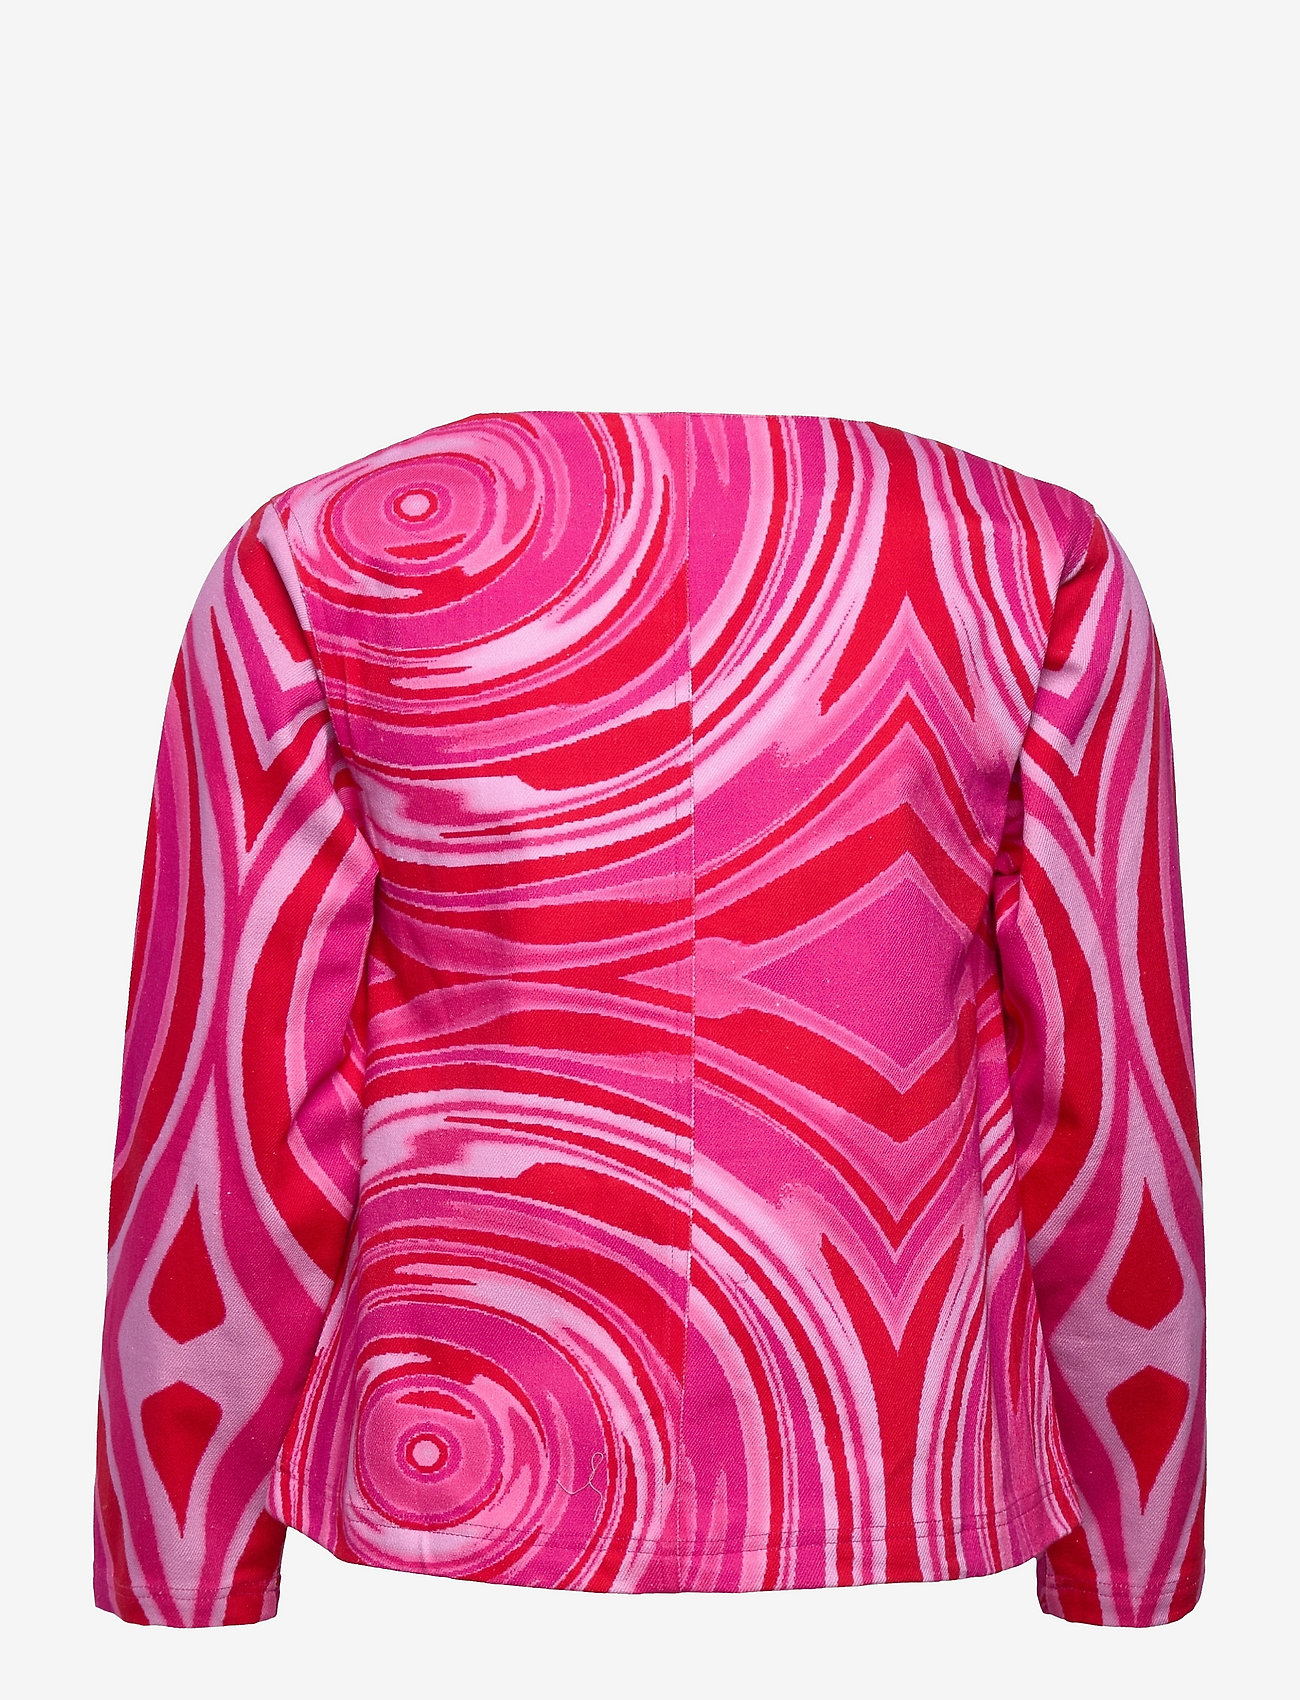 Hosbjerg - Frama Shirt - kobiety - swirl pink - 1